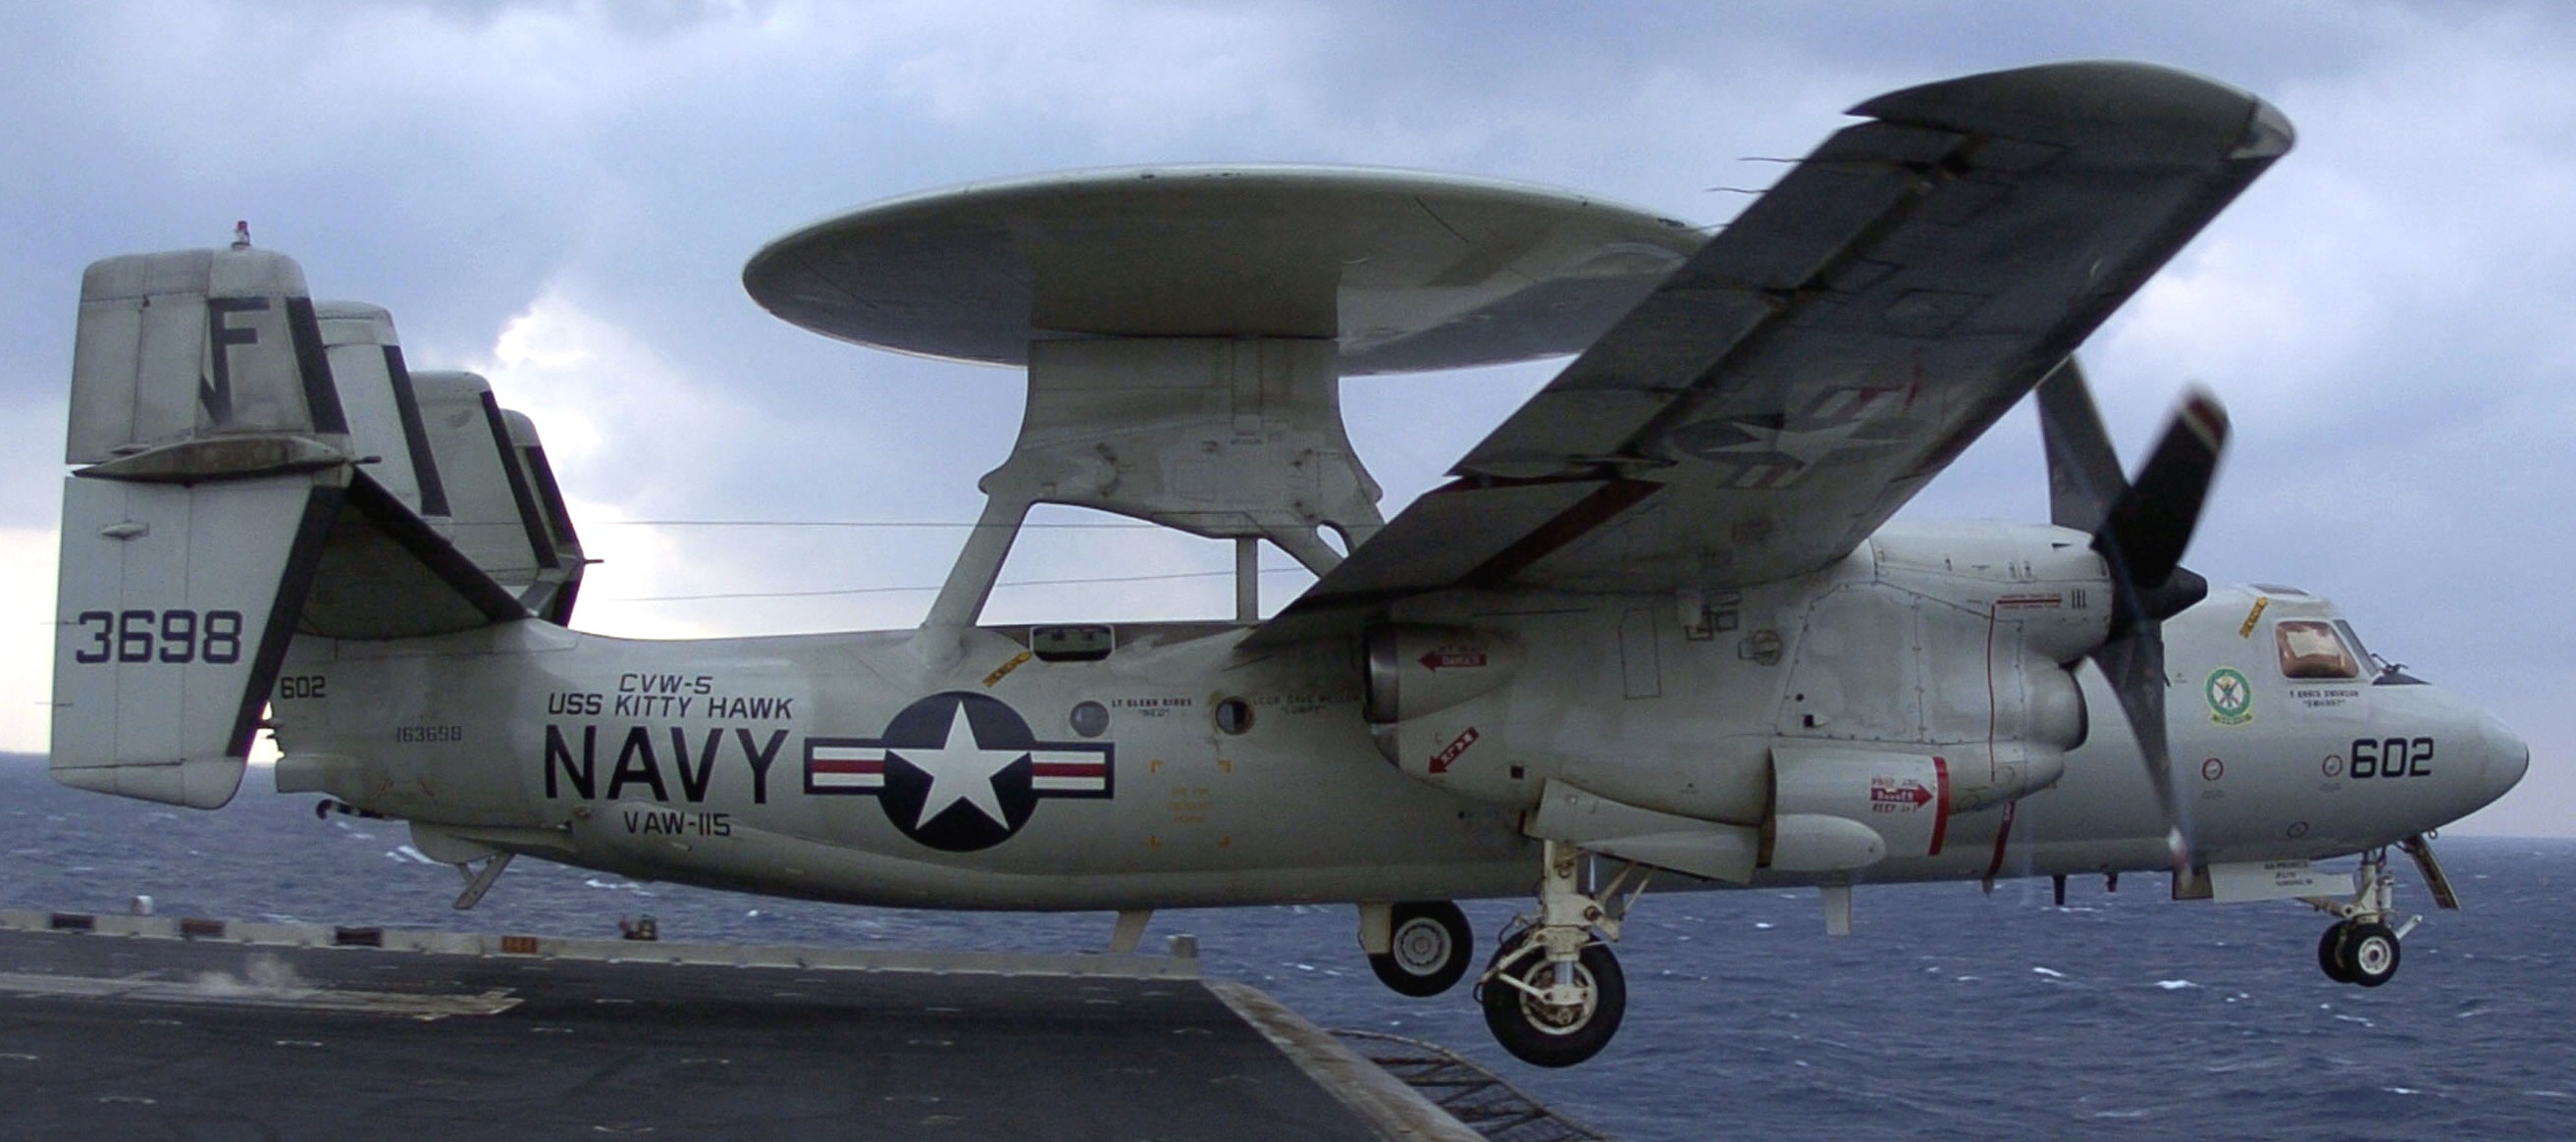 vaw-115 liberty bells carrier airborne early warning squadron us navy grumman e-2c hawkeye cvw-5 uss kitty hawk cv-63 24